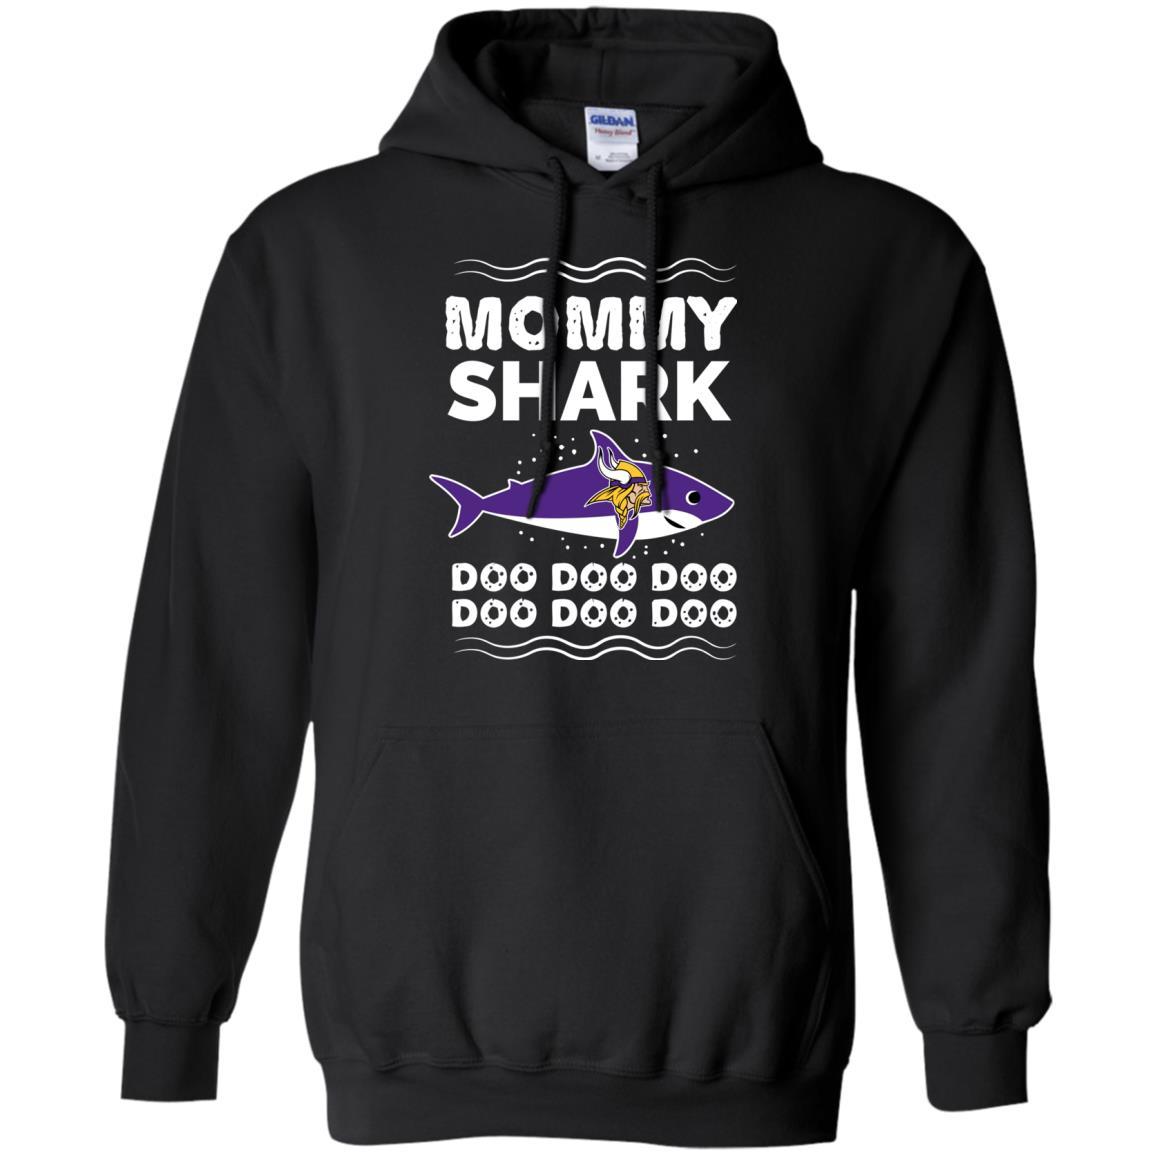 Buy Mommy Shark Minnesota Vikings Doo Doo Doo Shirts